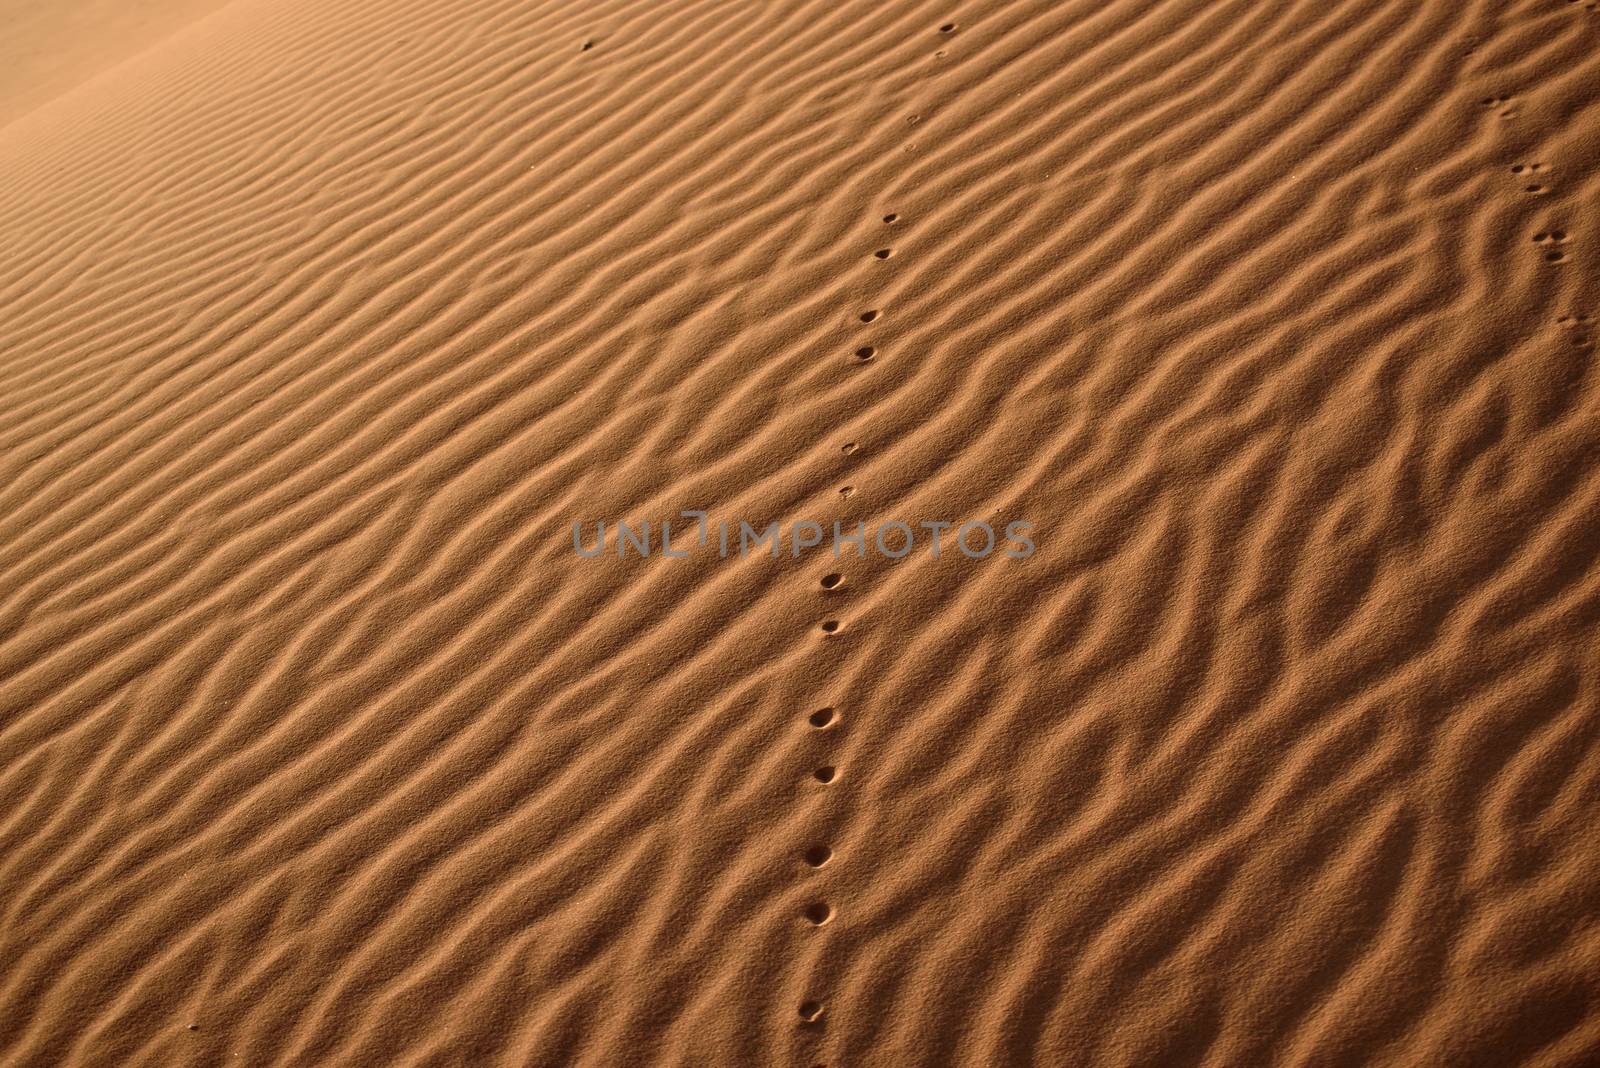 Sand dunes in the Sahara Desert, Erg Chebbi, Merzouga, Morocco